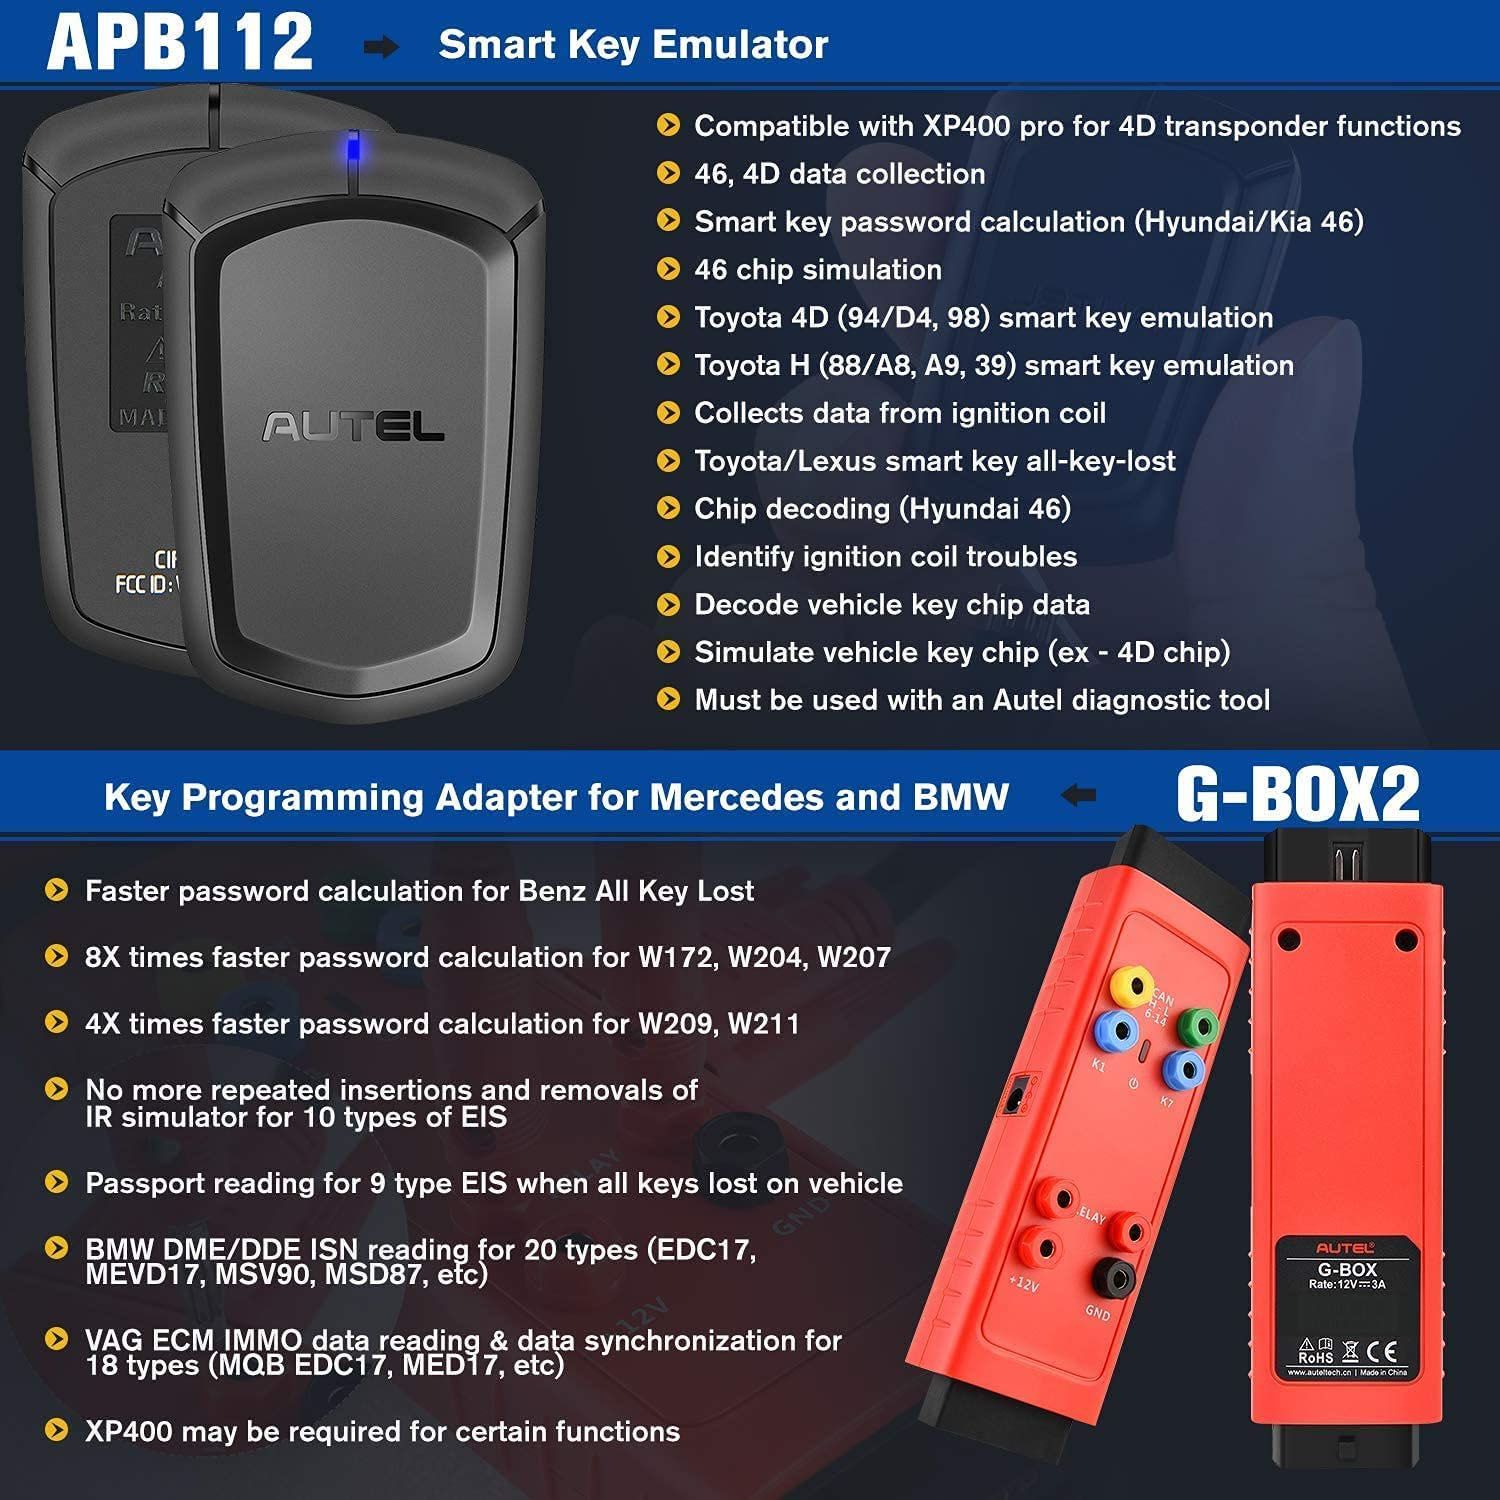  GBOX2가 포함된 Autel APB112